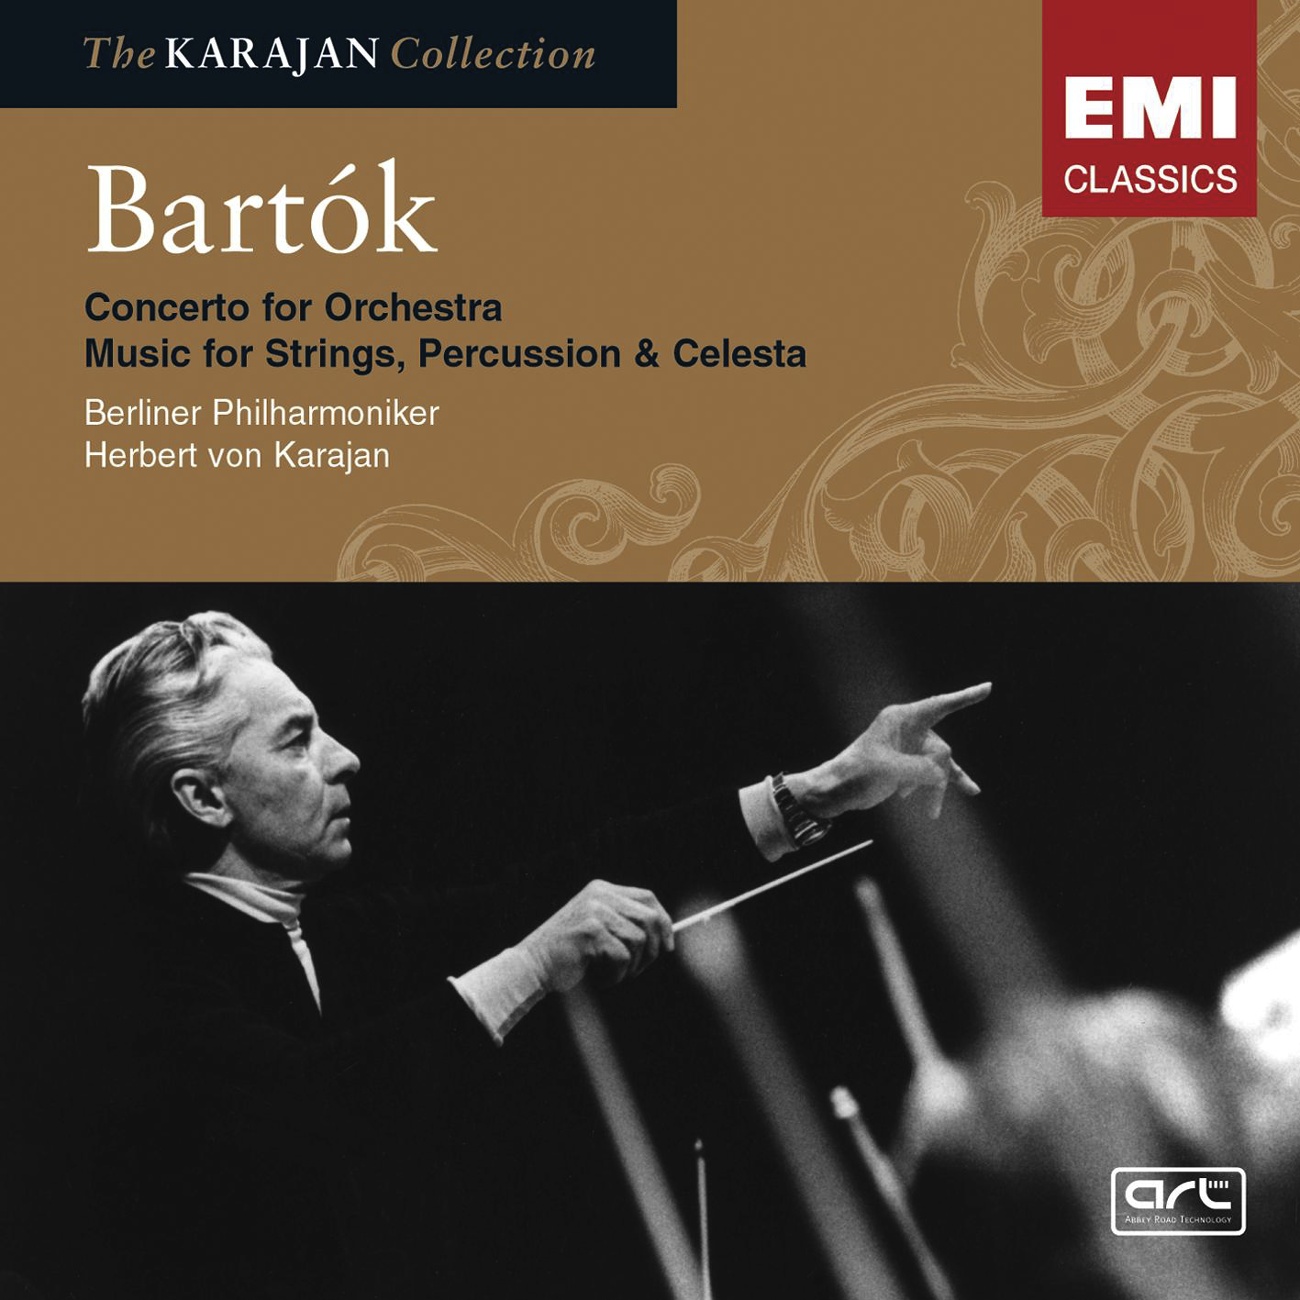 Bartok: Concerto for Orchestra, Music for Strings, Percussion & Celesta